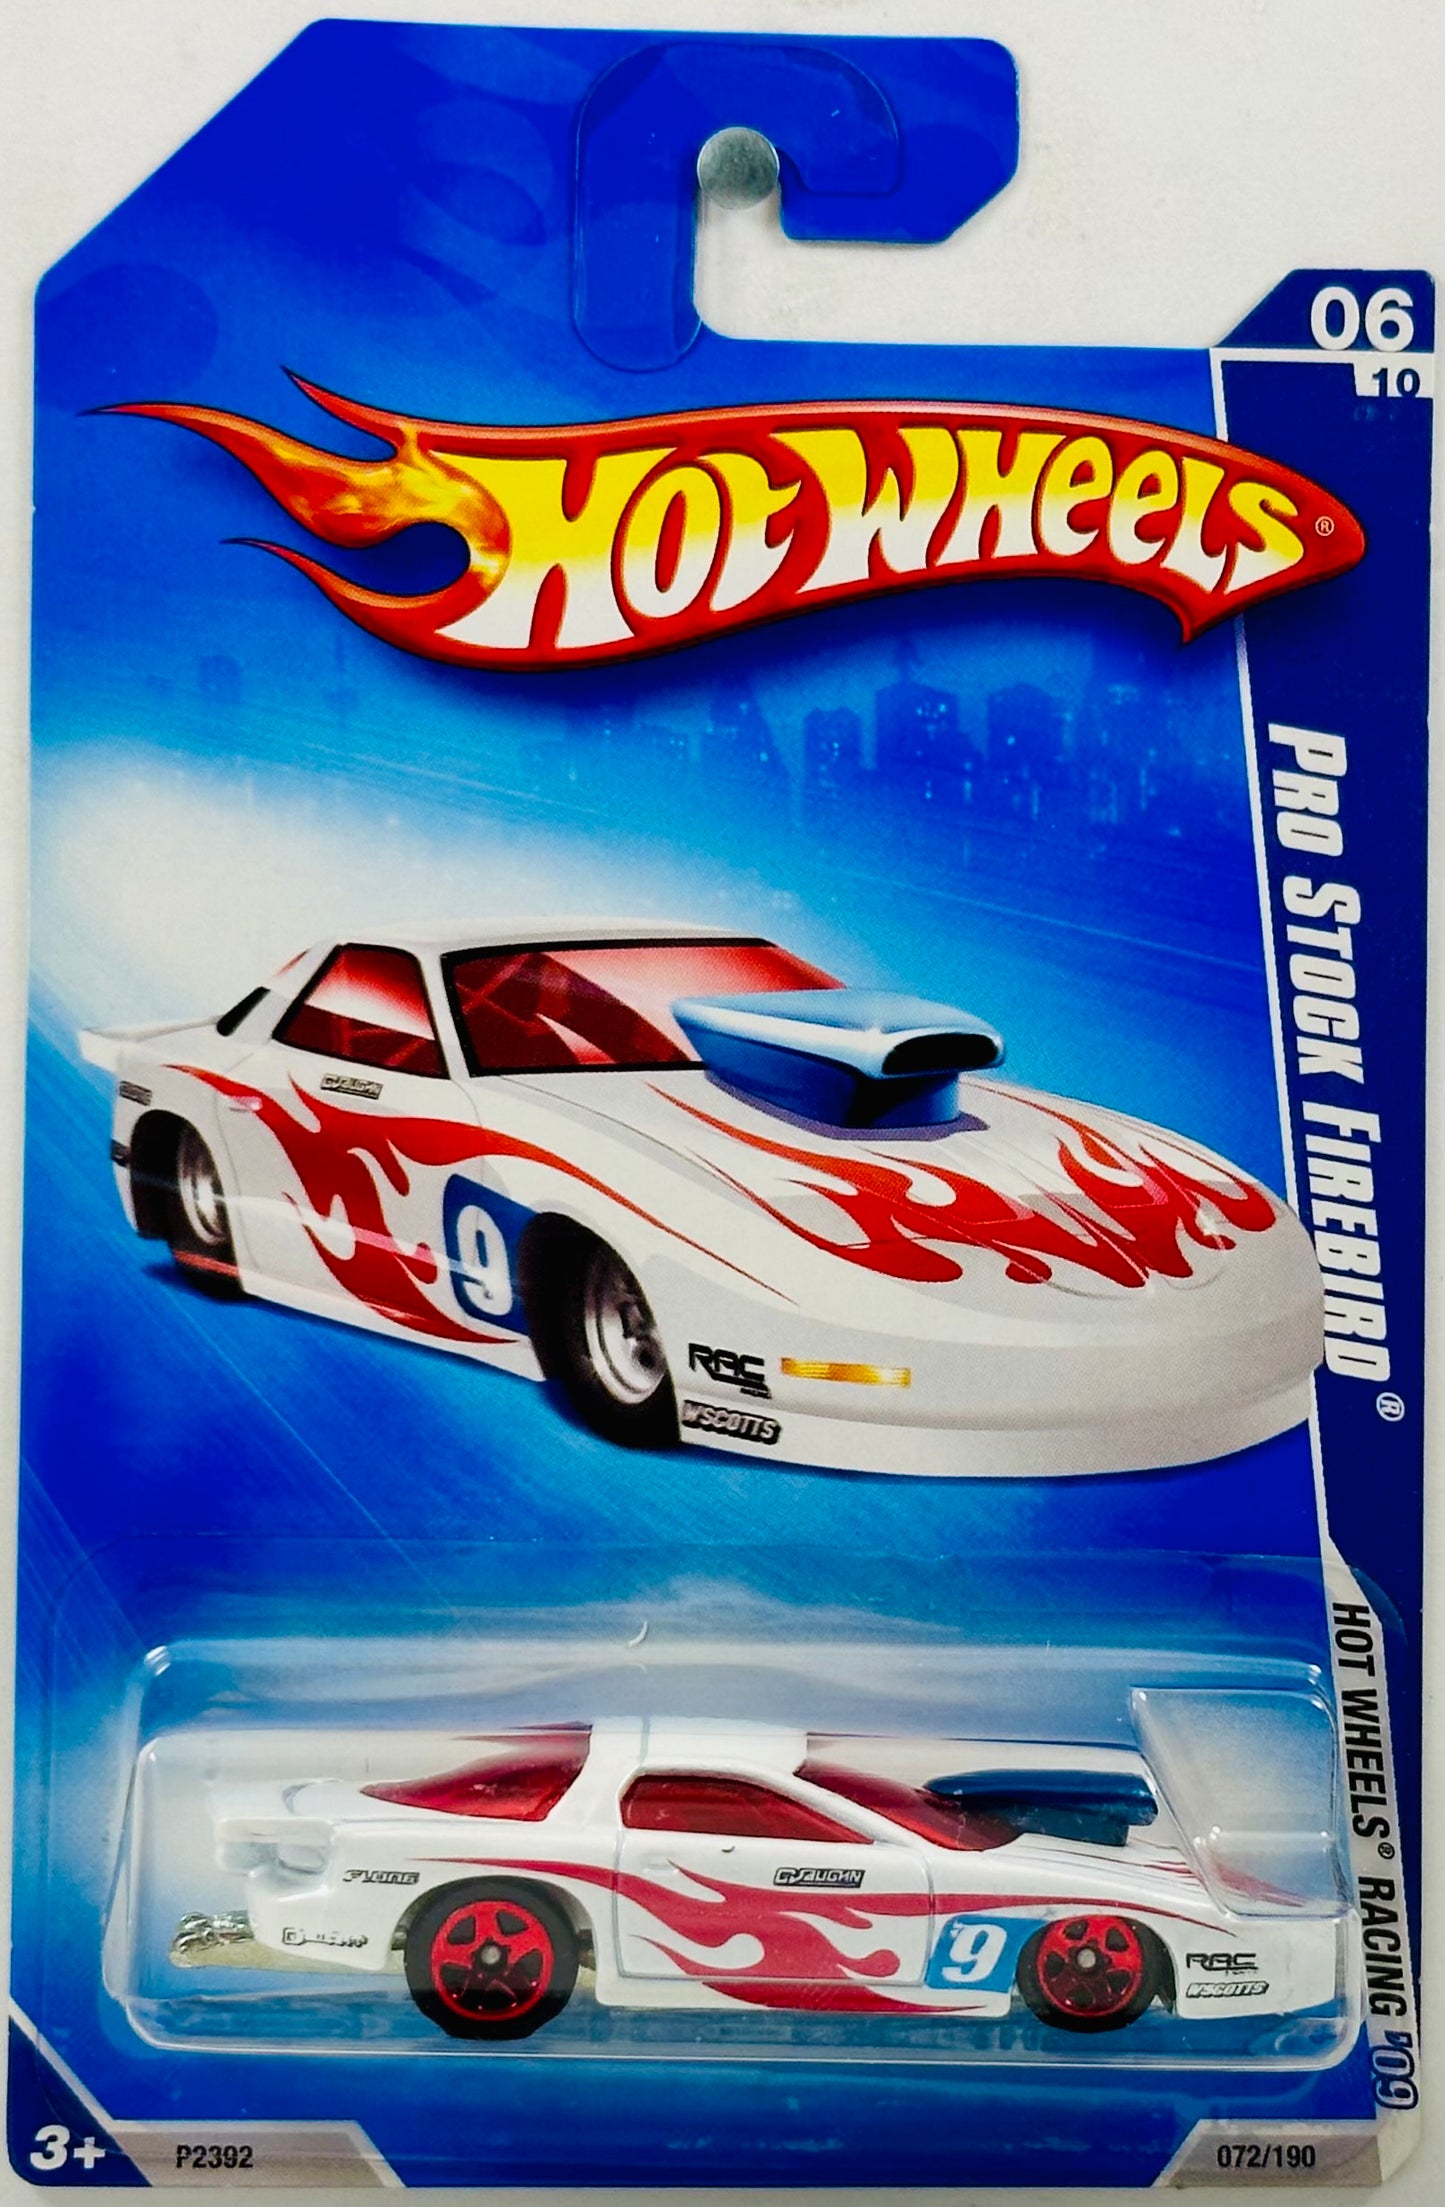 Hot Wheels 2009 - Collector # 072/190 - Hot Wheels Racing 06/10 - Pro Stock Firebird - White - '9' / Red Flames - USA